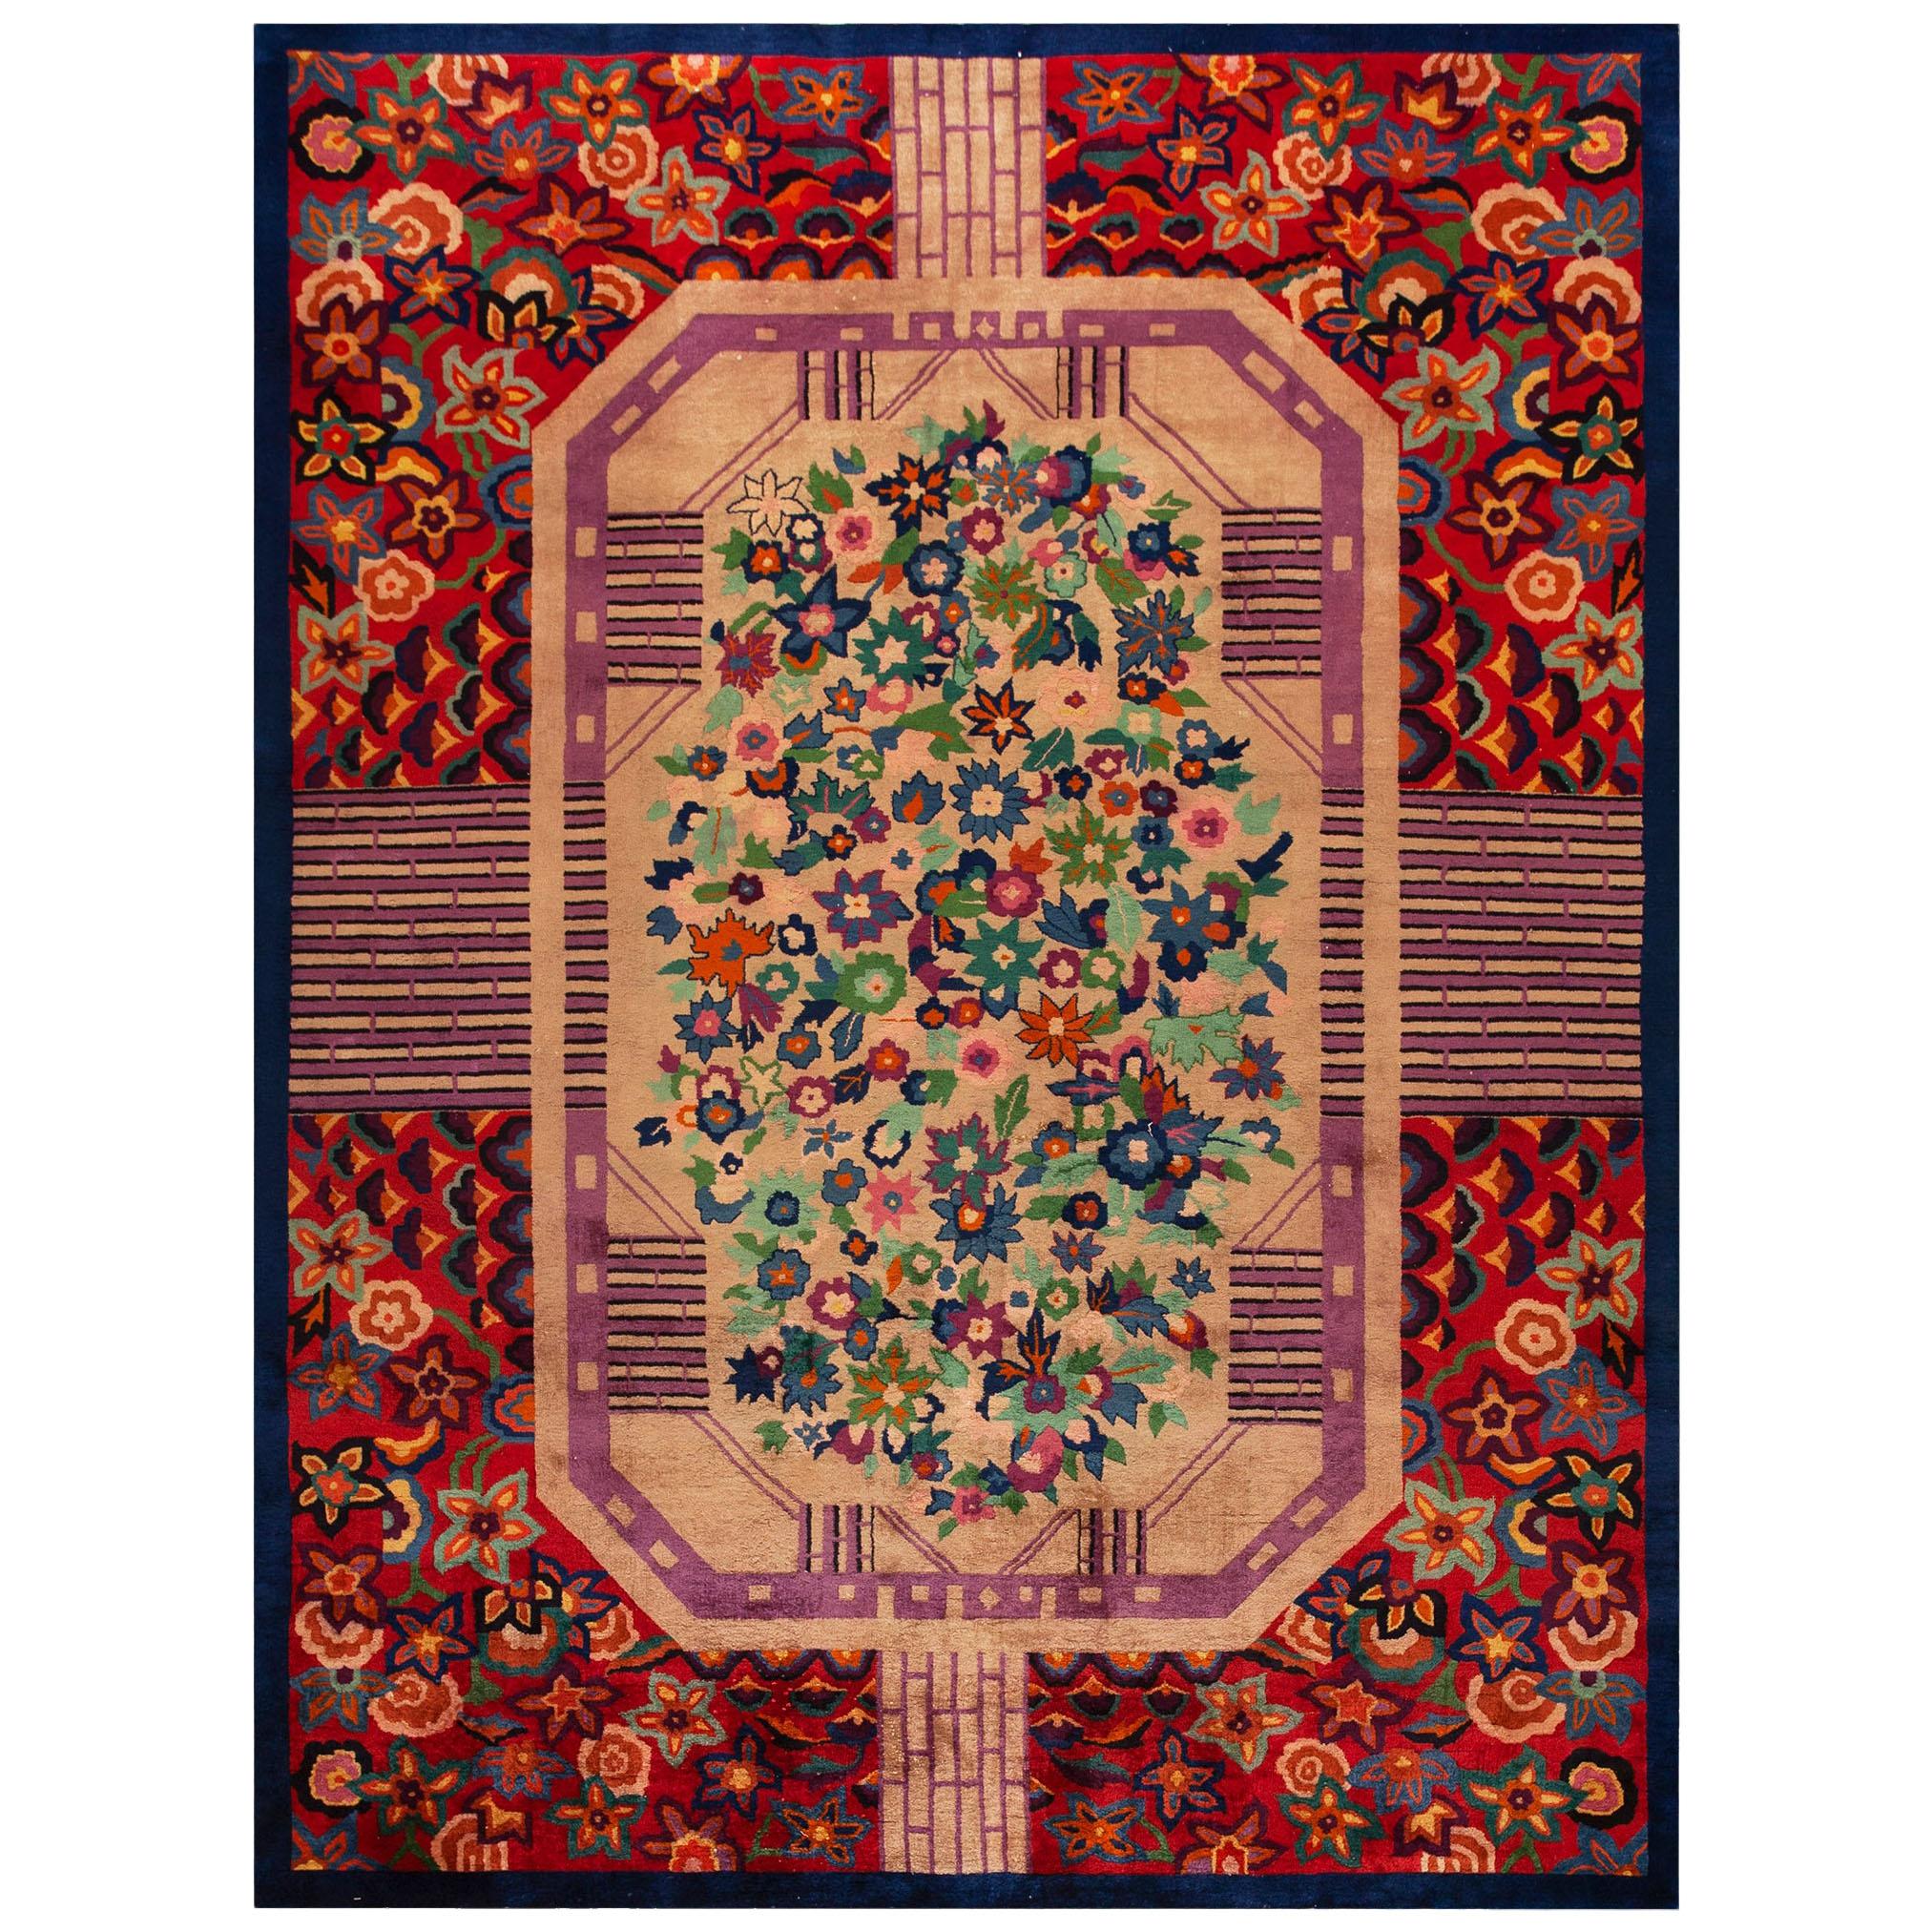 1920s Chinese Art Deco Carpet ( 8' 9" x 11' 6" - 266 x 350 cm)